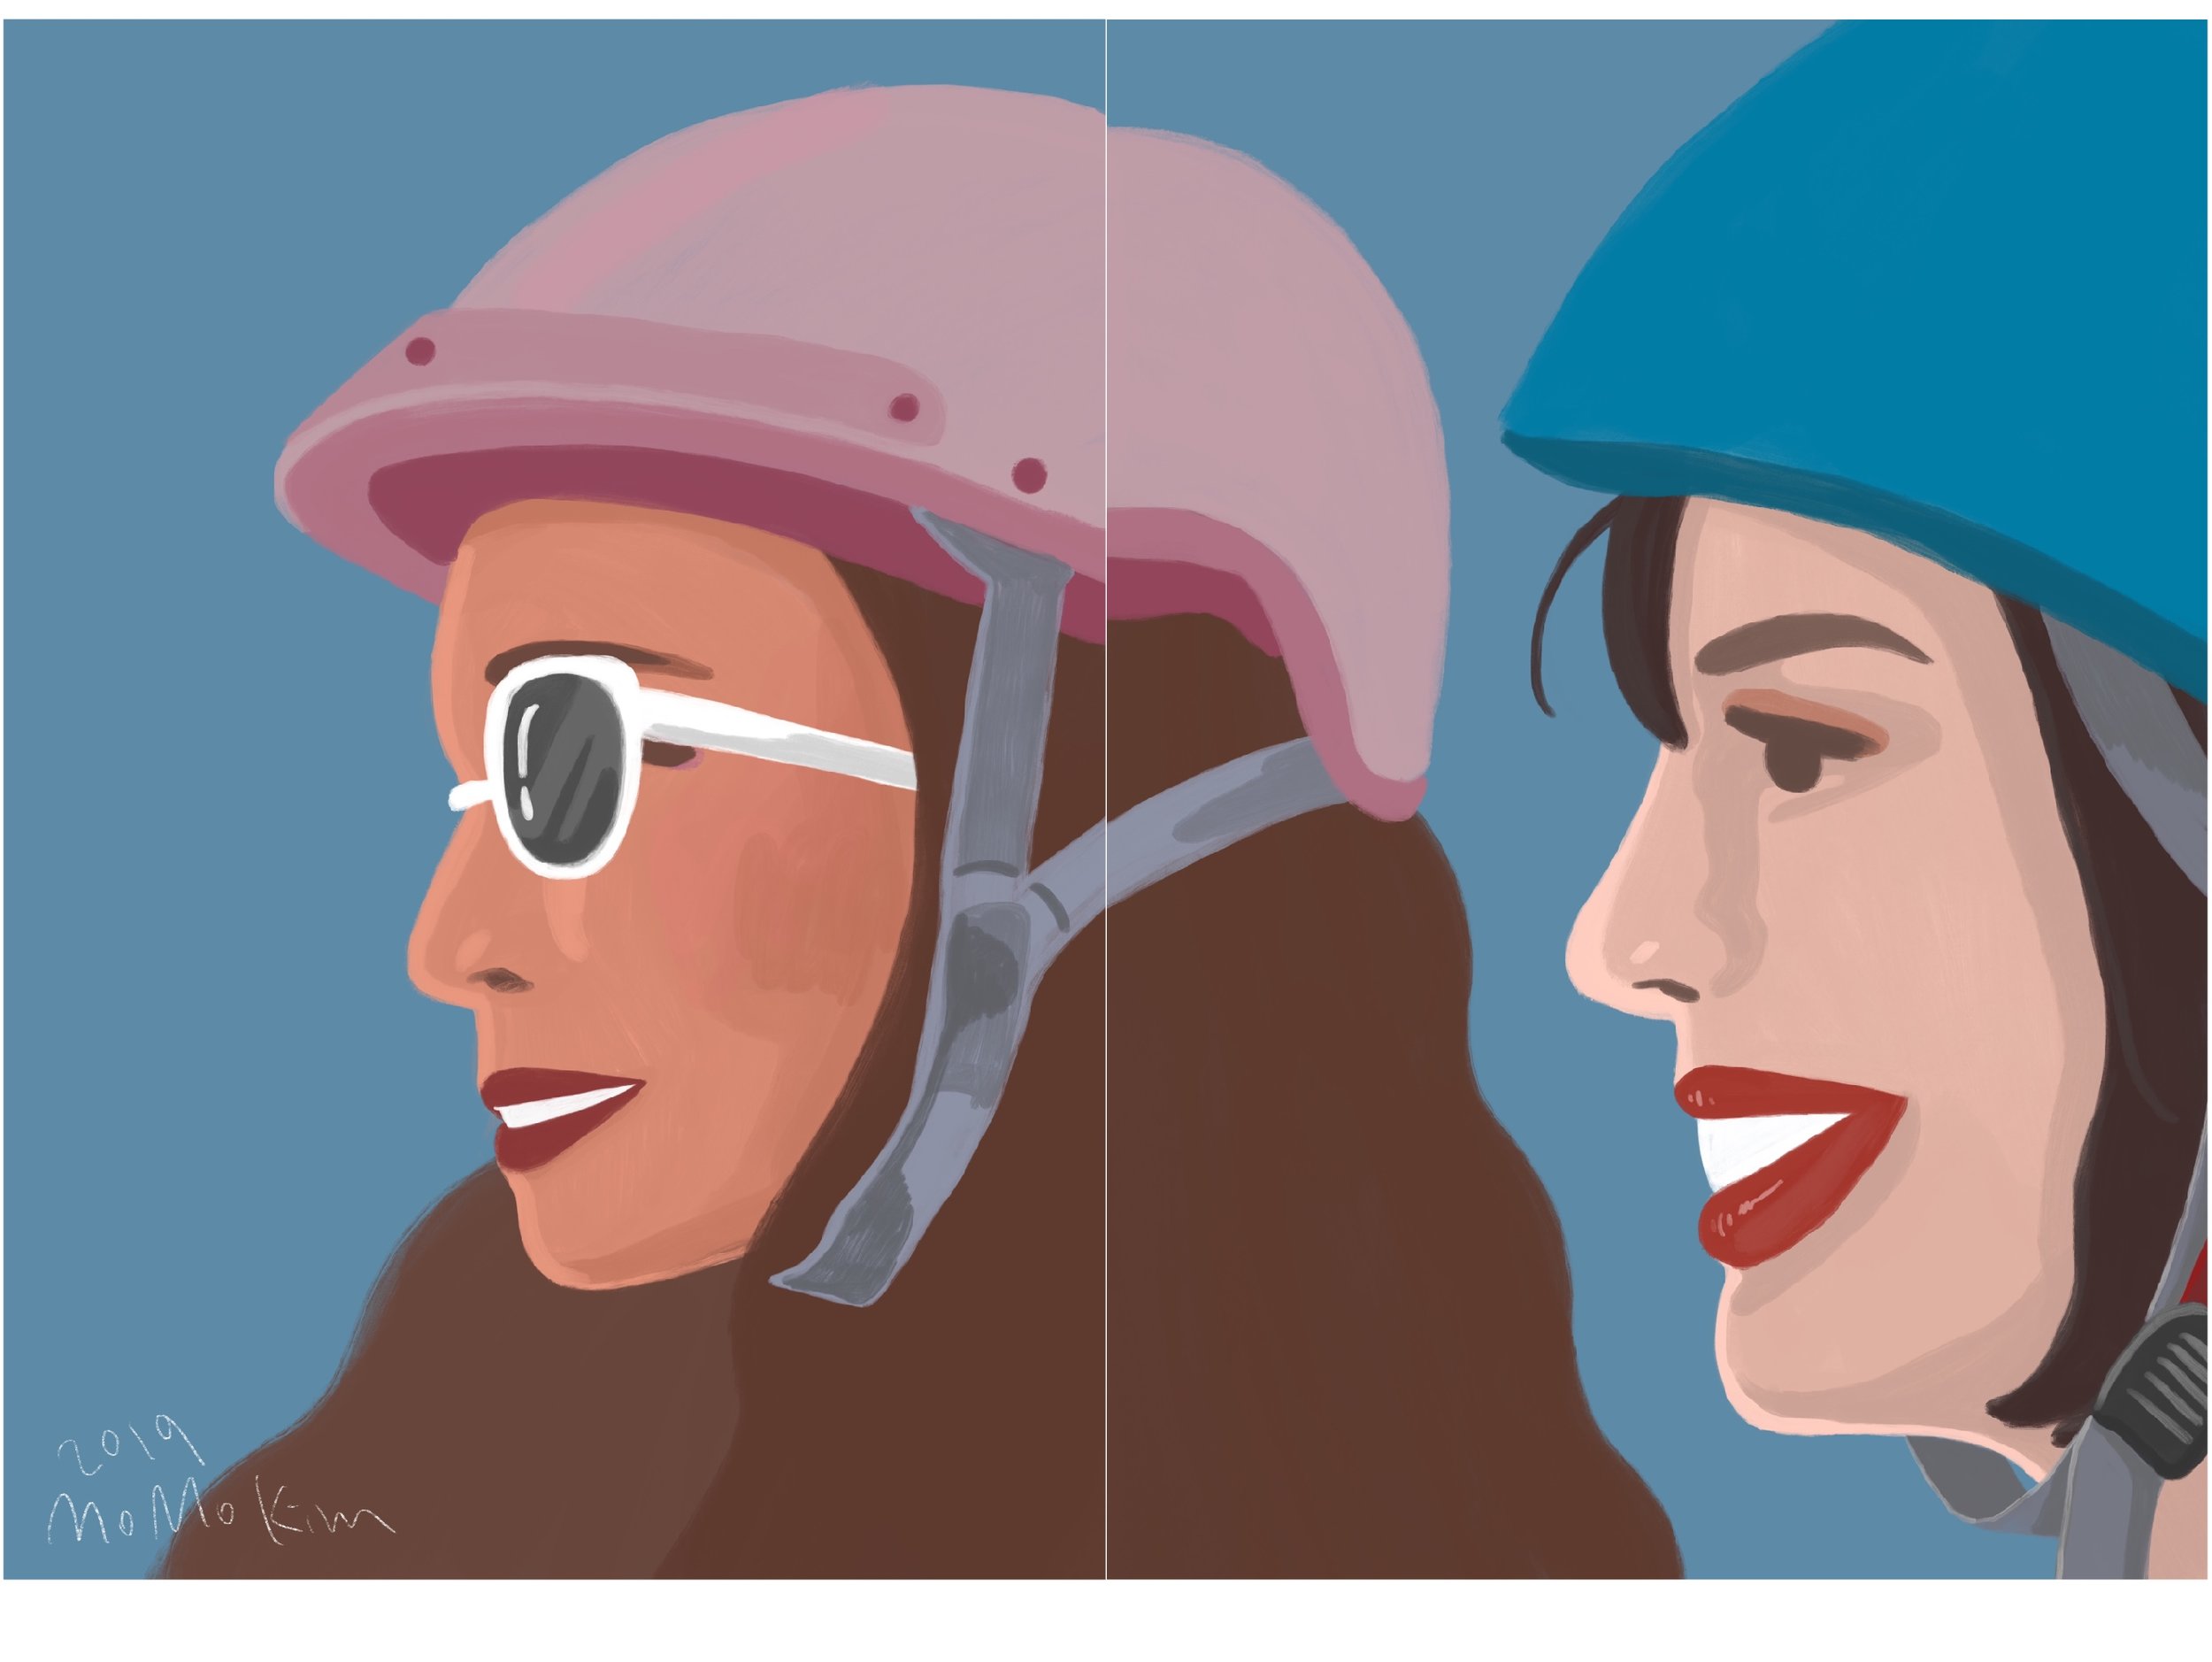 Motorcycle, women and helmets, 841x1188mm Digital 2019